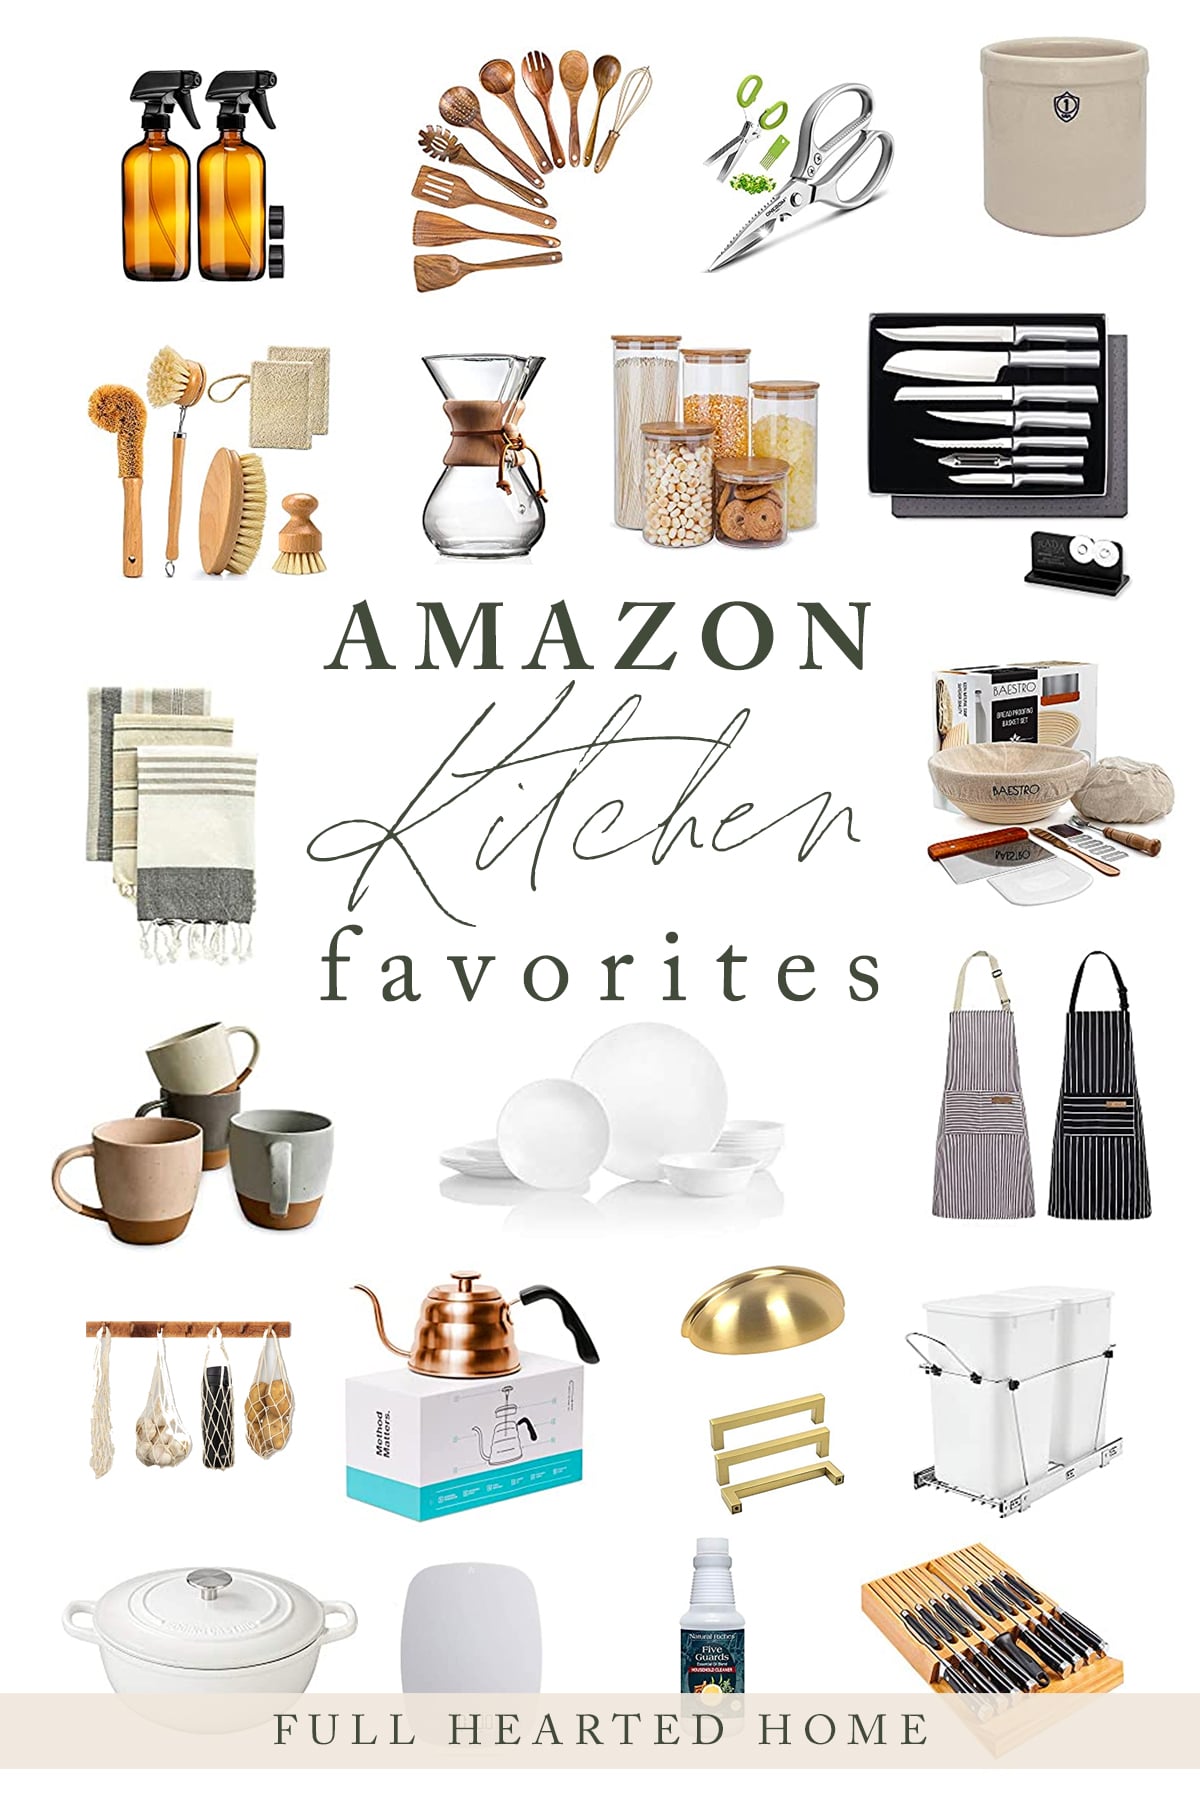 Our Favorite Amazon Kitchen Items